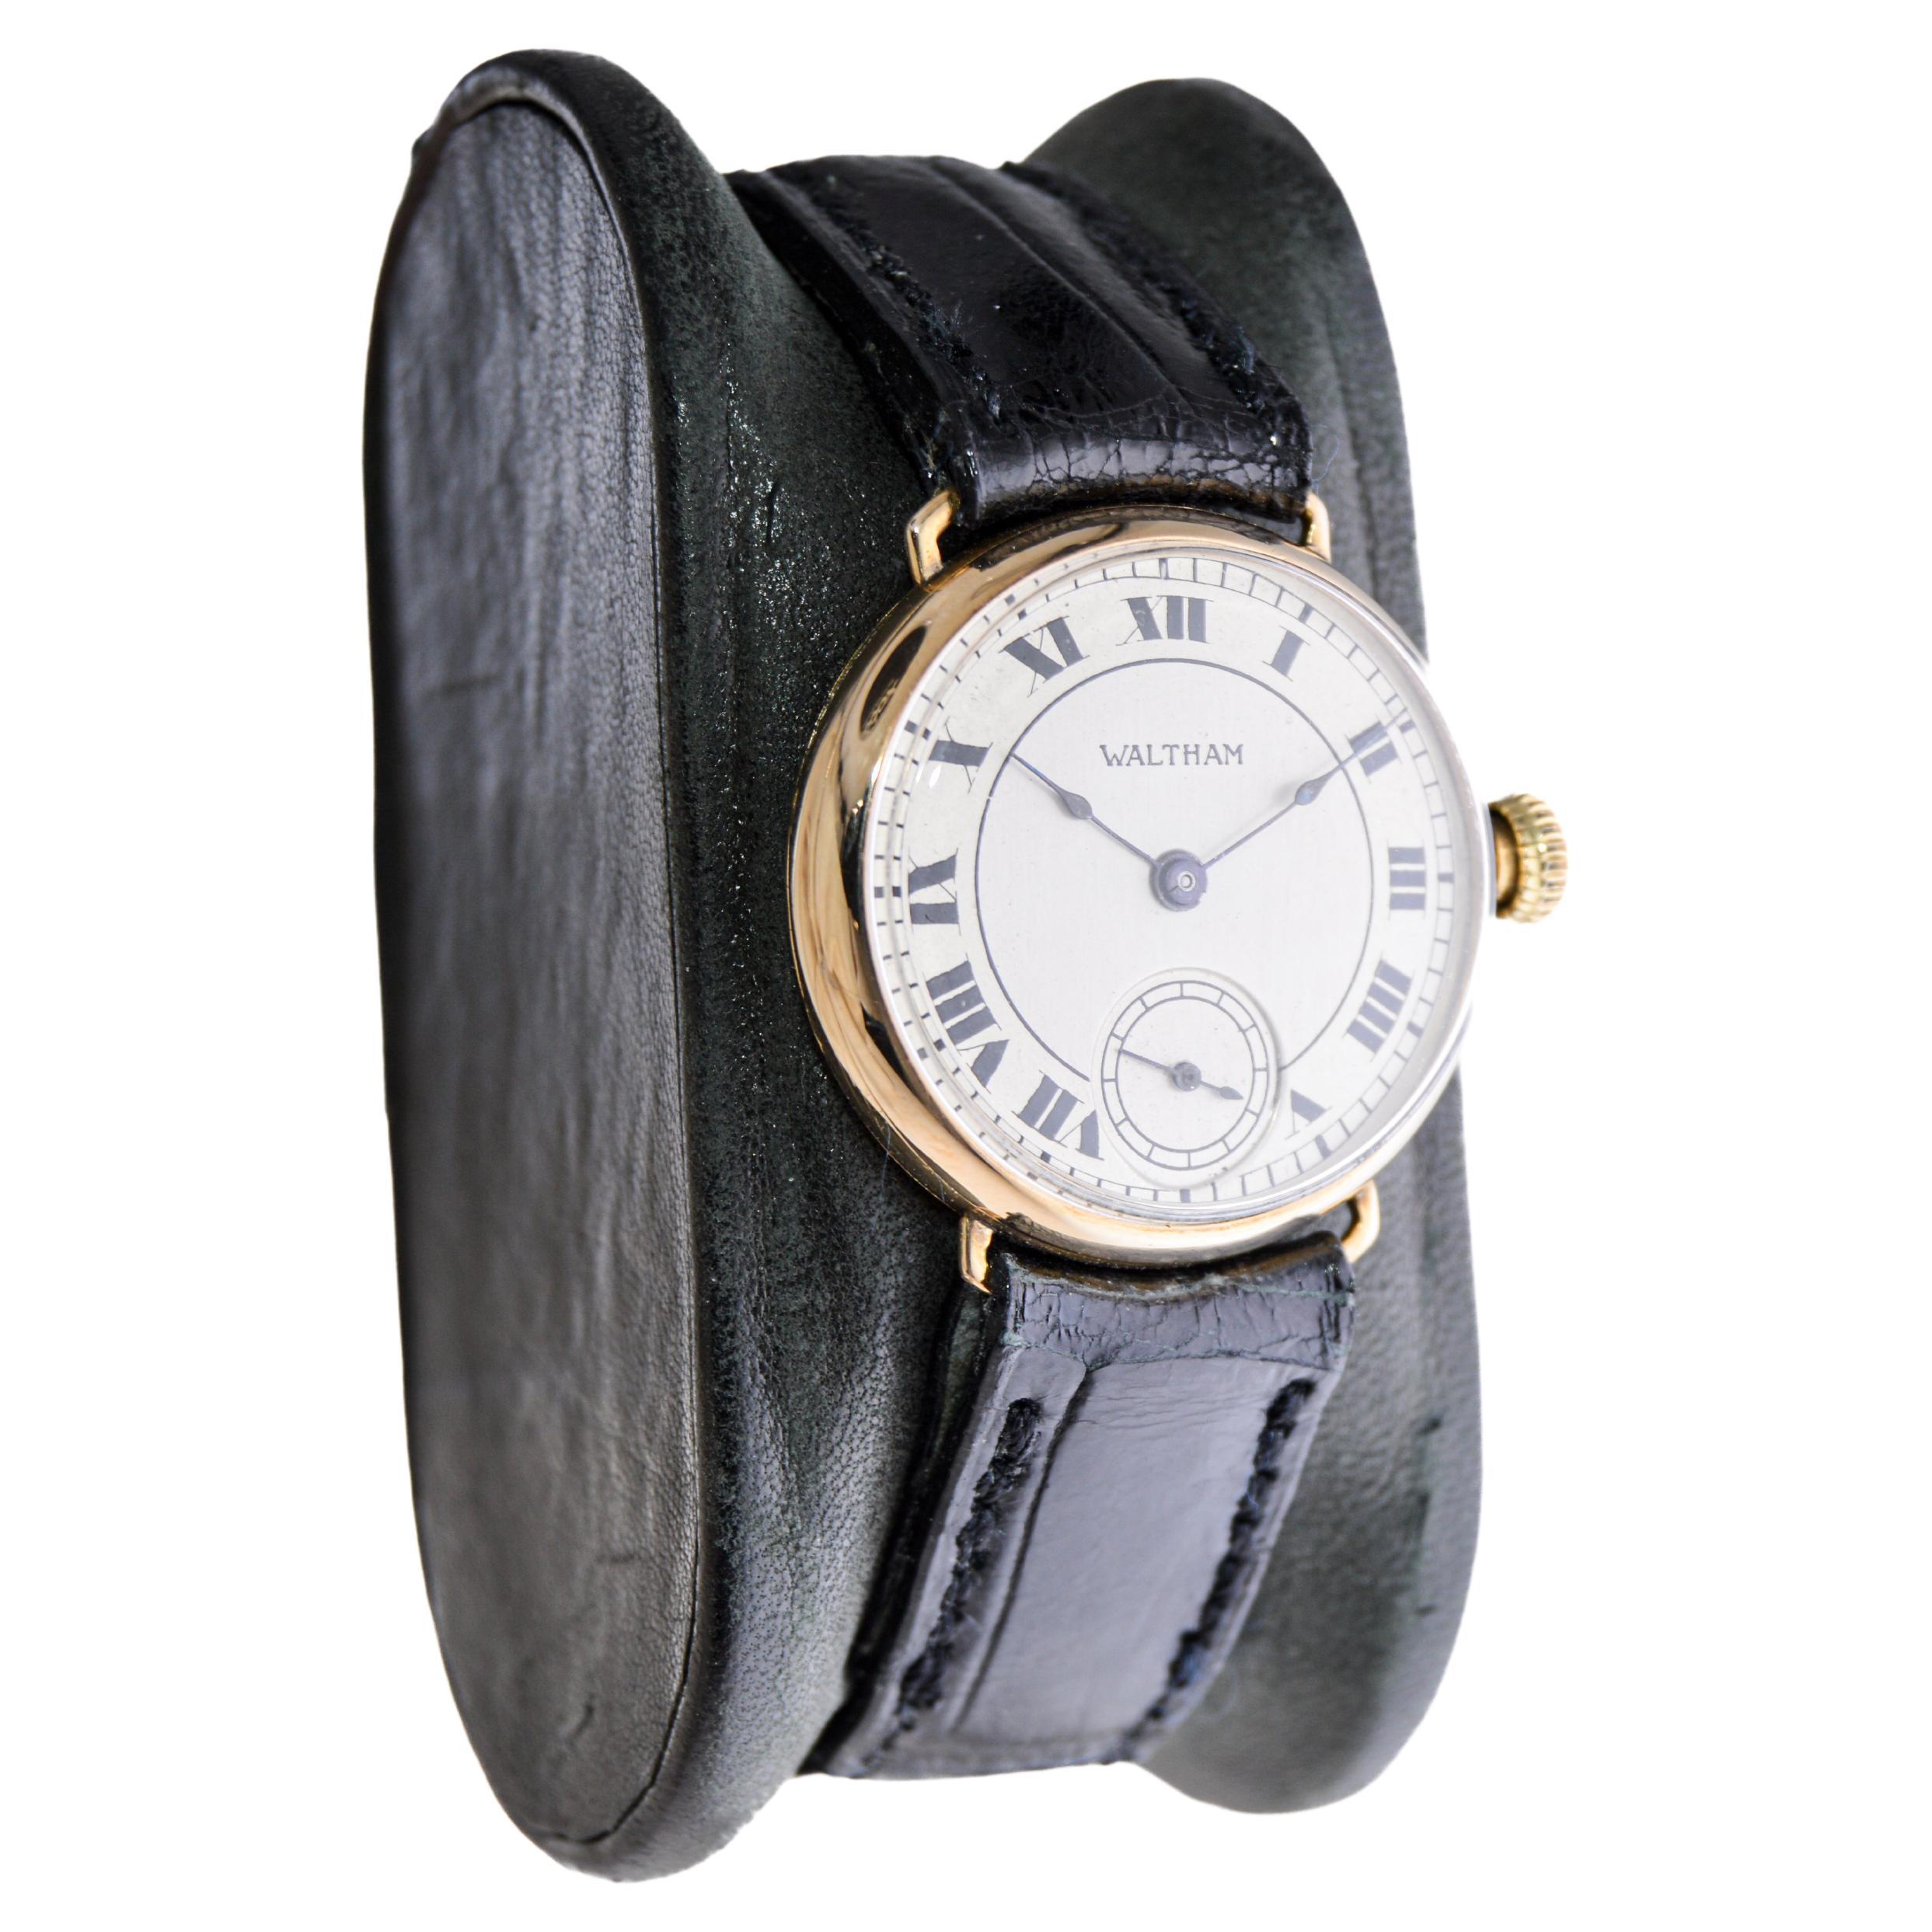 FABRIK / HAUS: Waltham Watch Company
STIL / REFERENZ: Art Deco / Campaigner Stil 
METALL / MATERIAL: 14Kt. Massiv Gold
CIRCA: 1918
ABMESSUNGEN: Länge 28mm X Durchmesser 27mm
UHRWERK / KALIBER: Handaufzug / 17 Jewels / Kaliber Ruby Series
ZIFFERBLATT